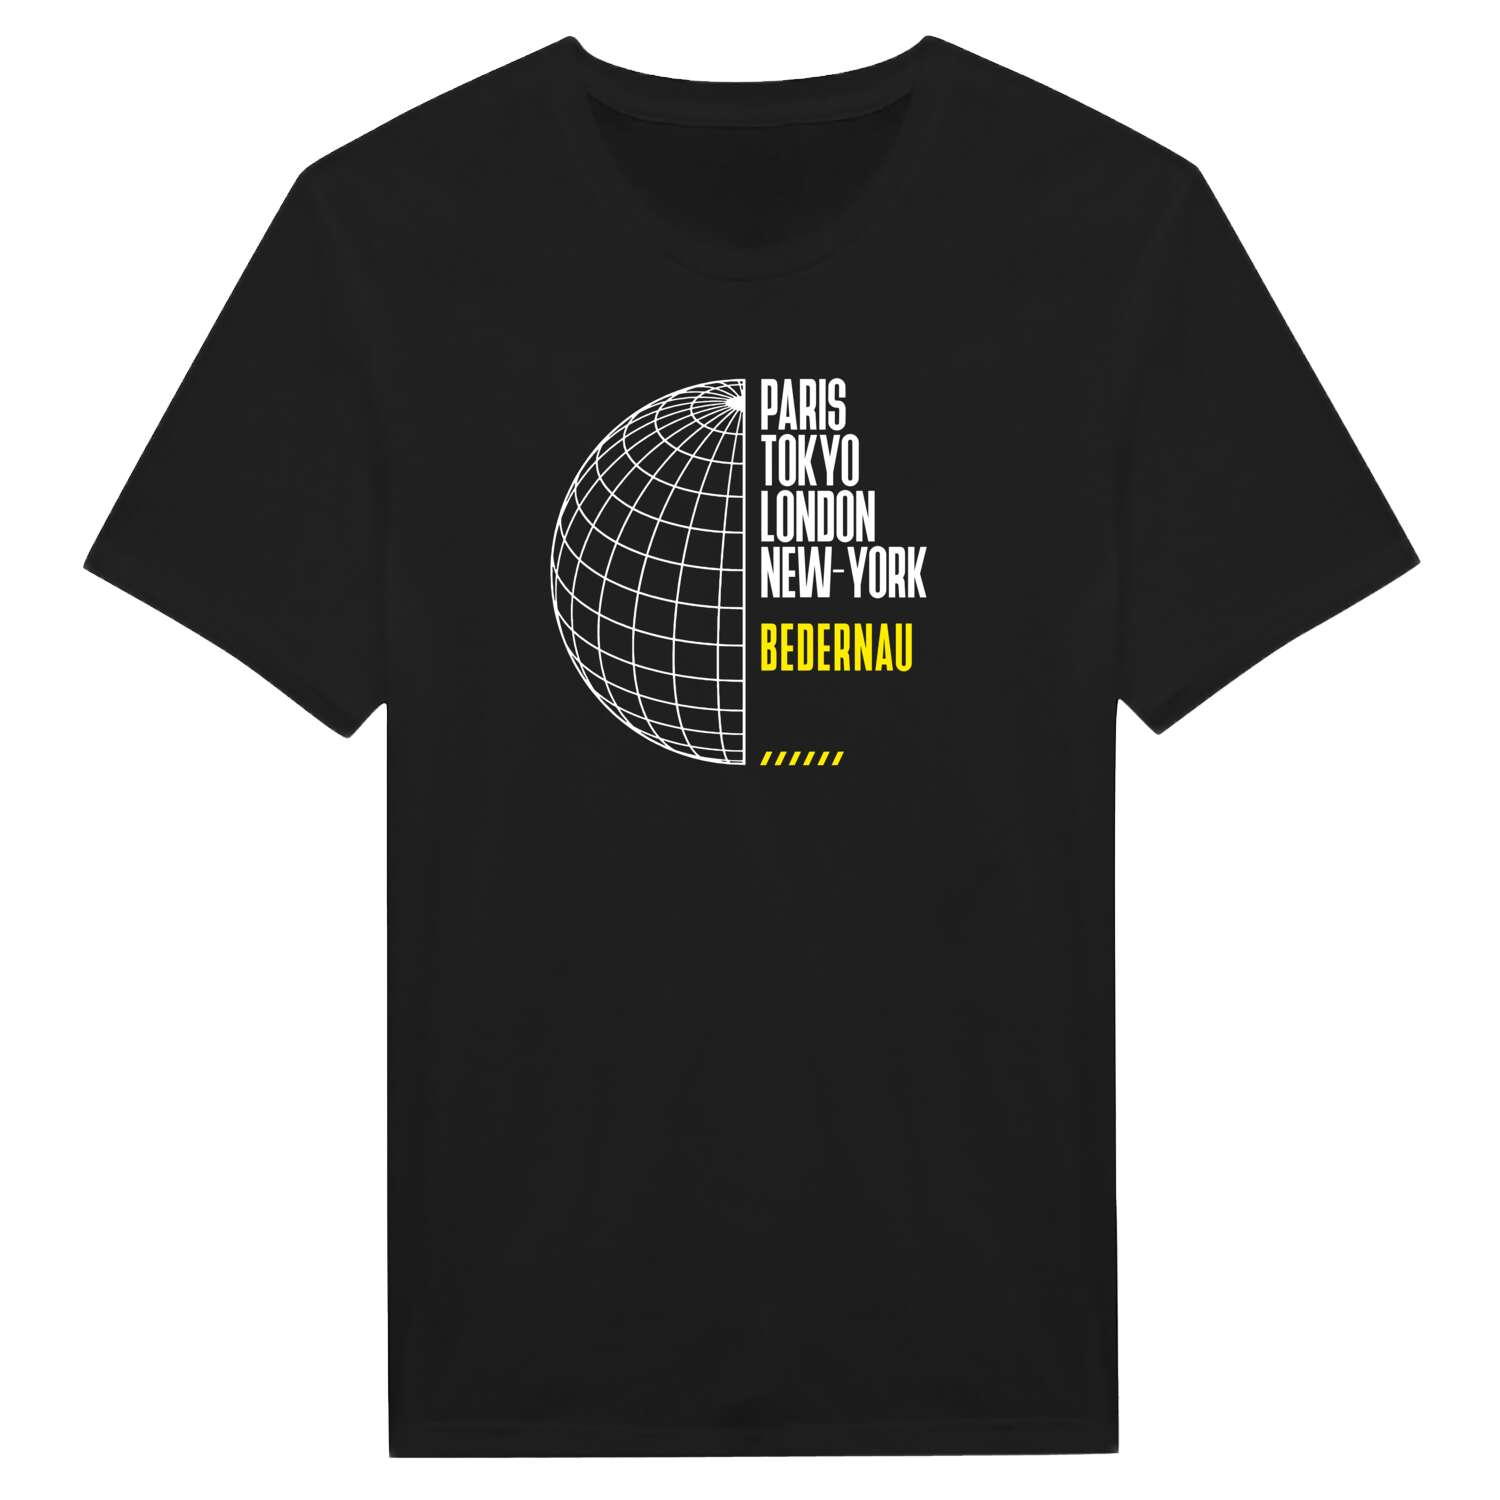 Bedernau T-Shirt »Paris Tokyo London«